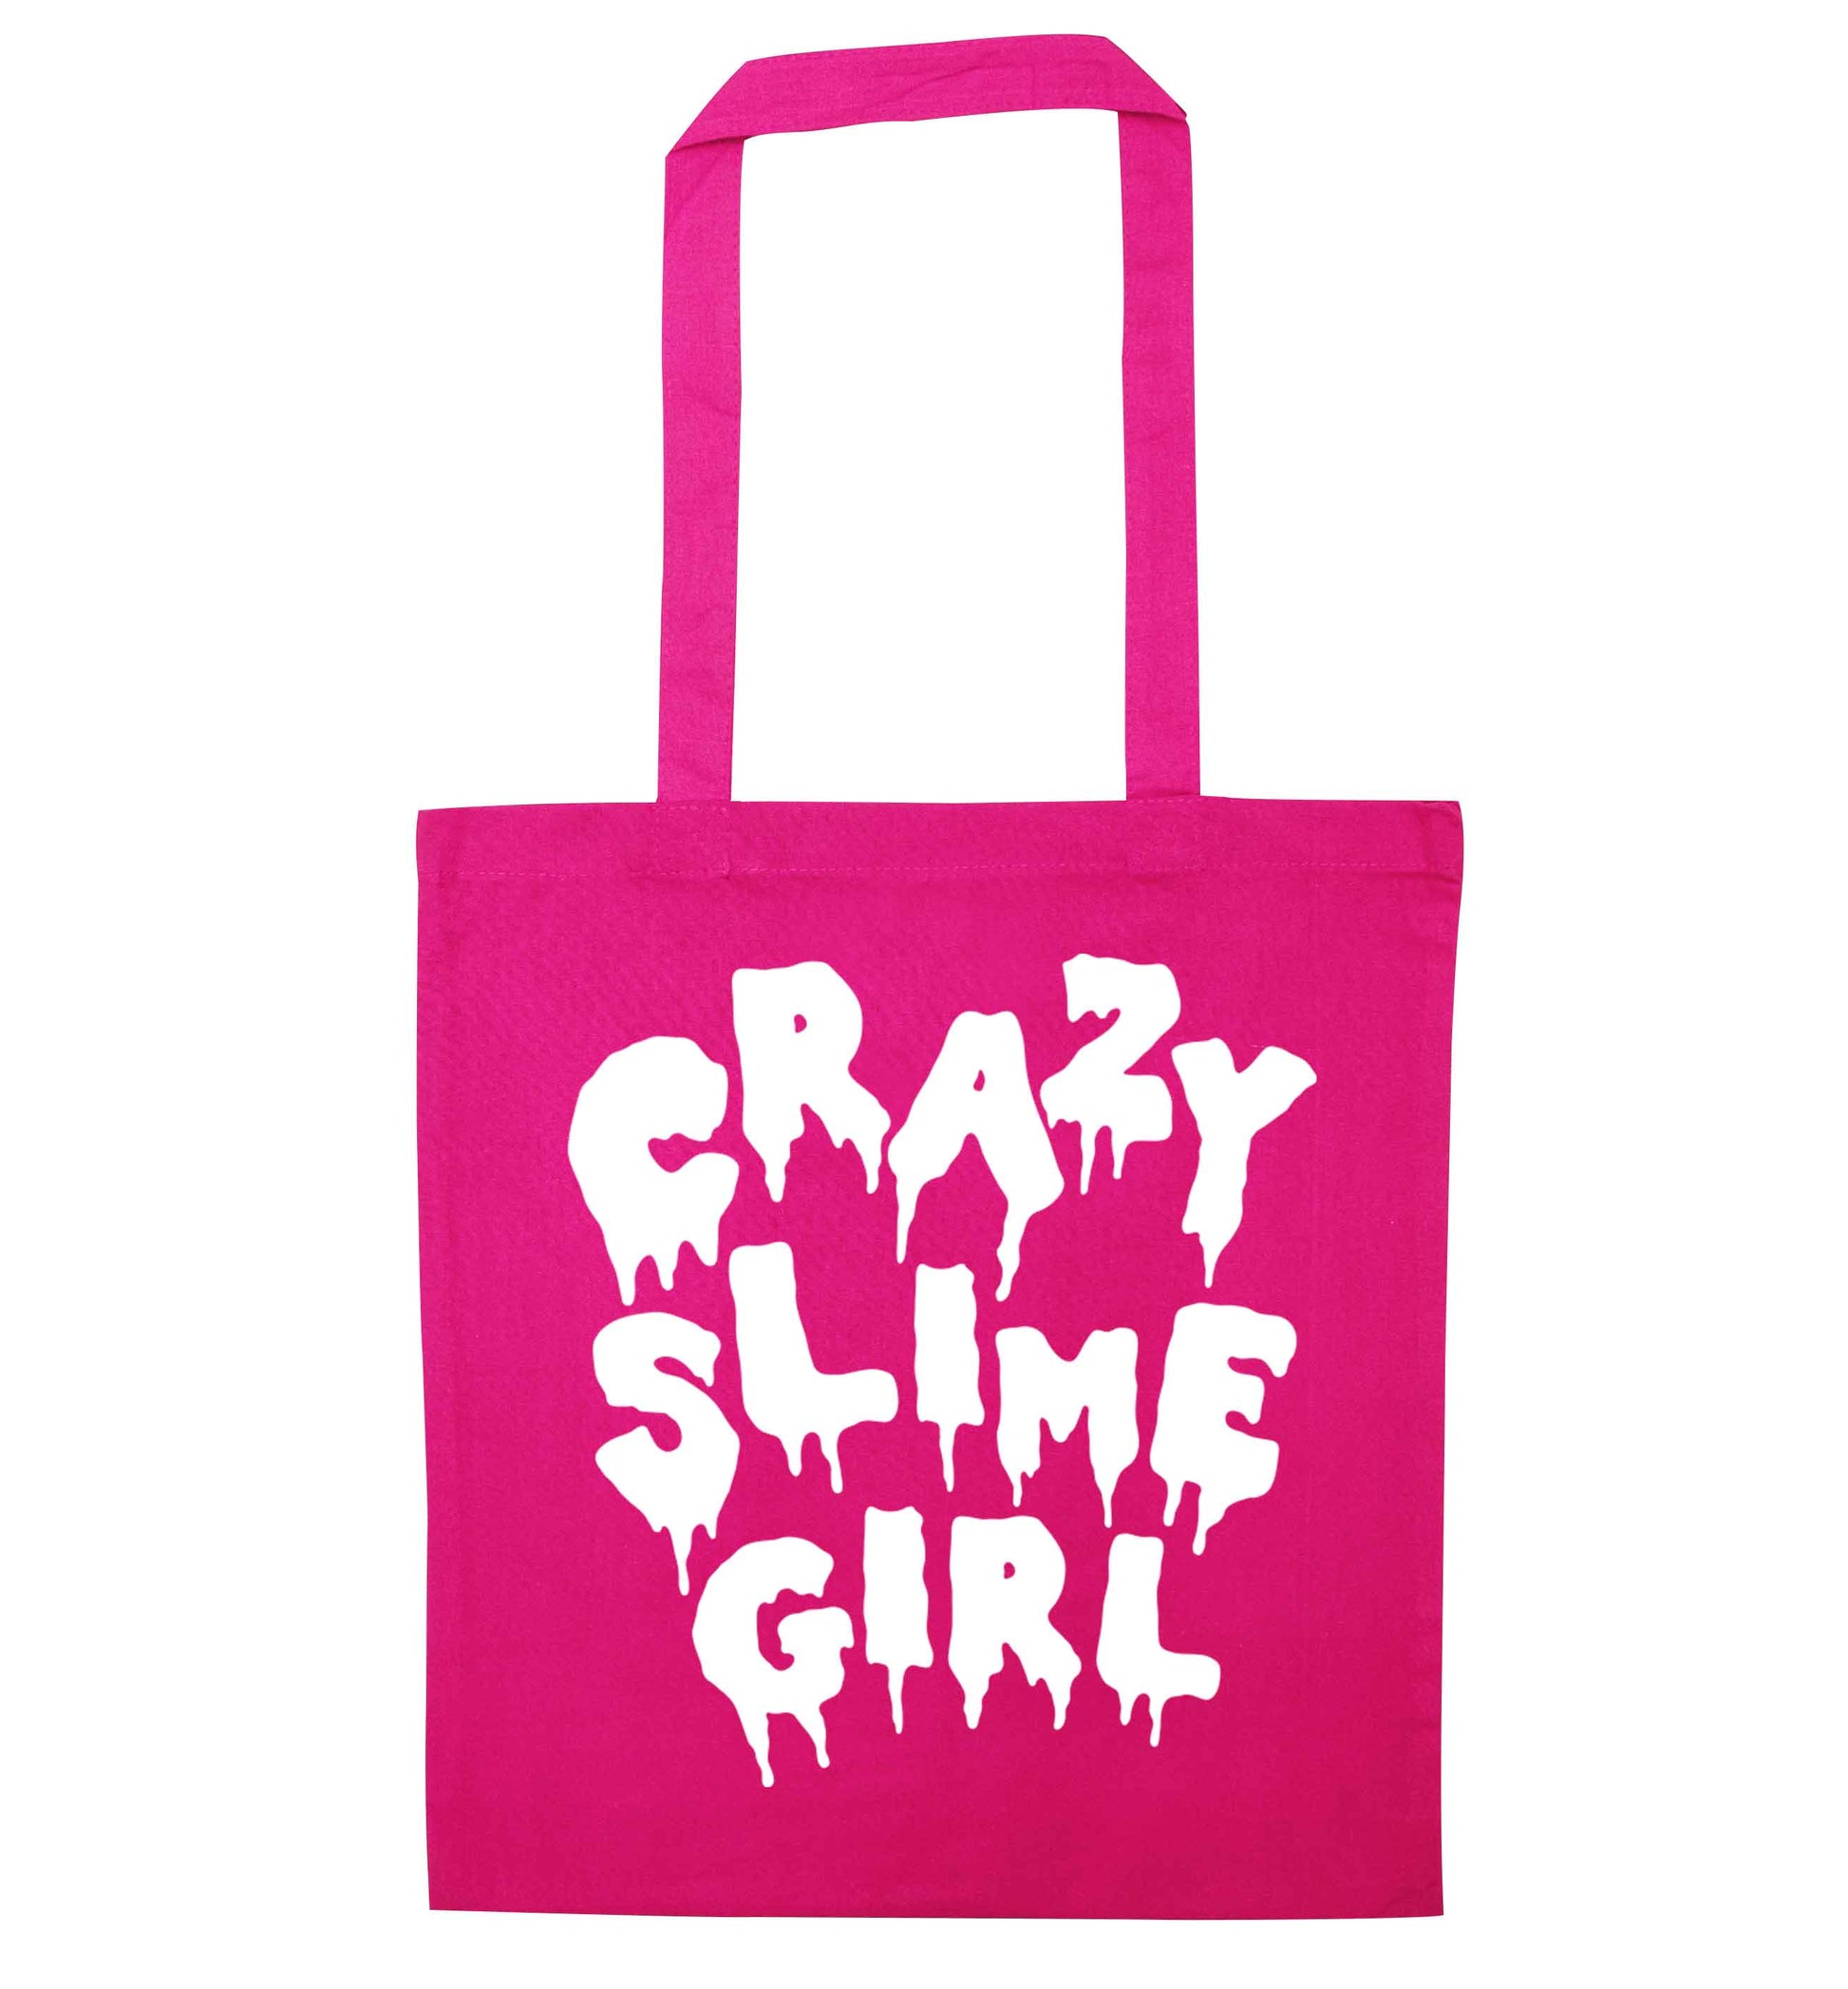 Crazy slime girl pink tote bag